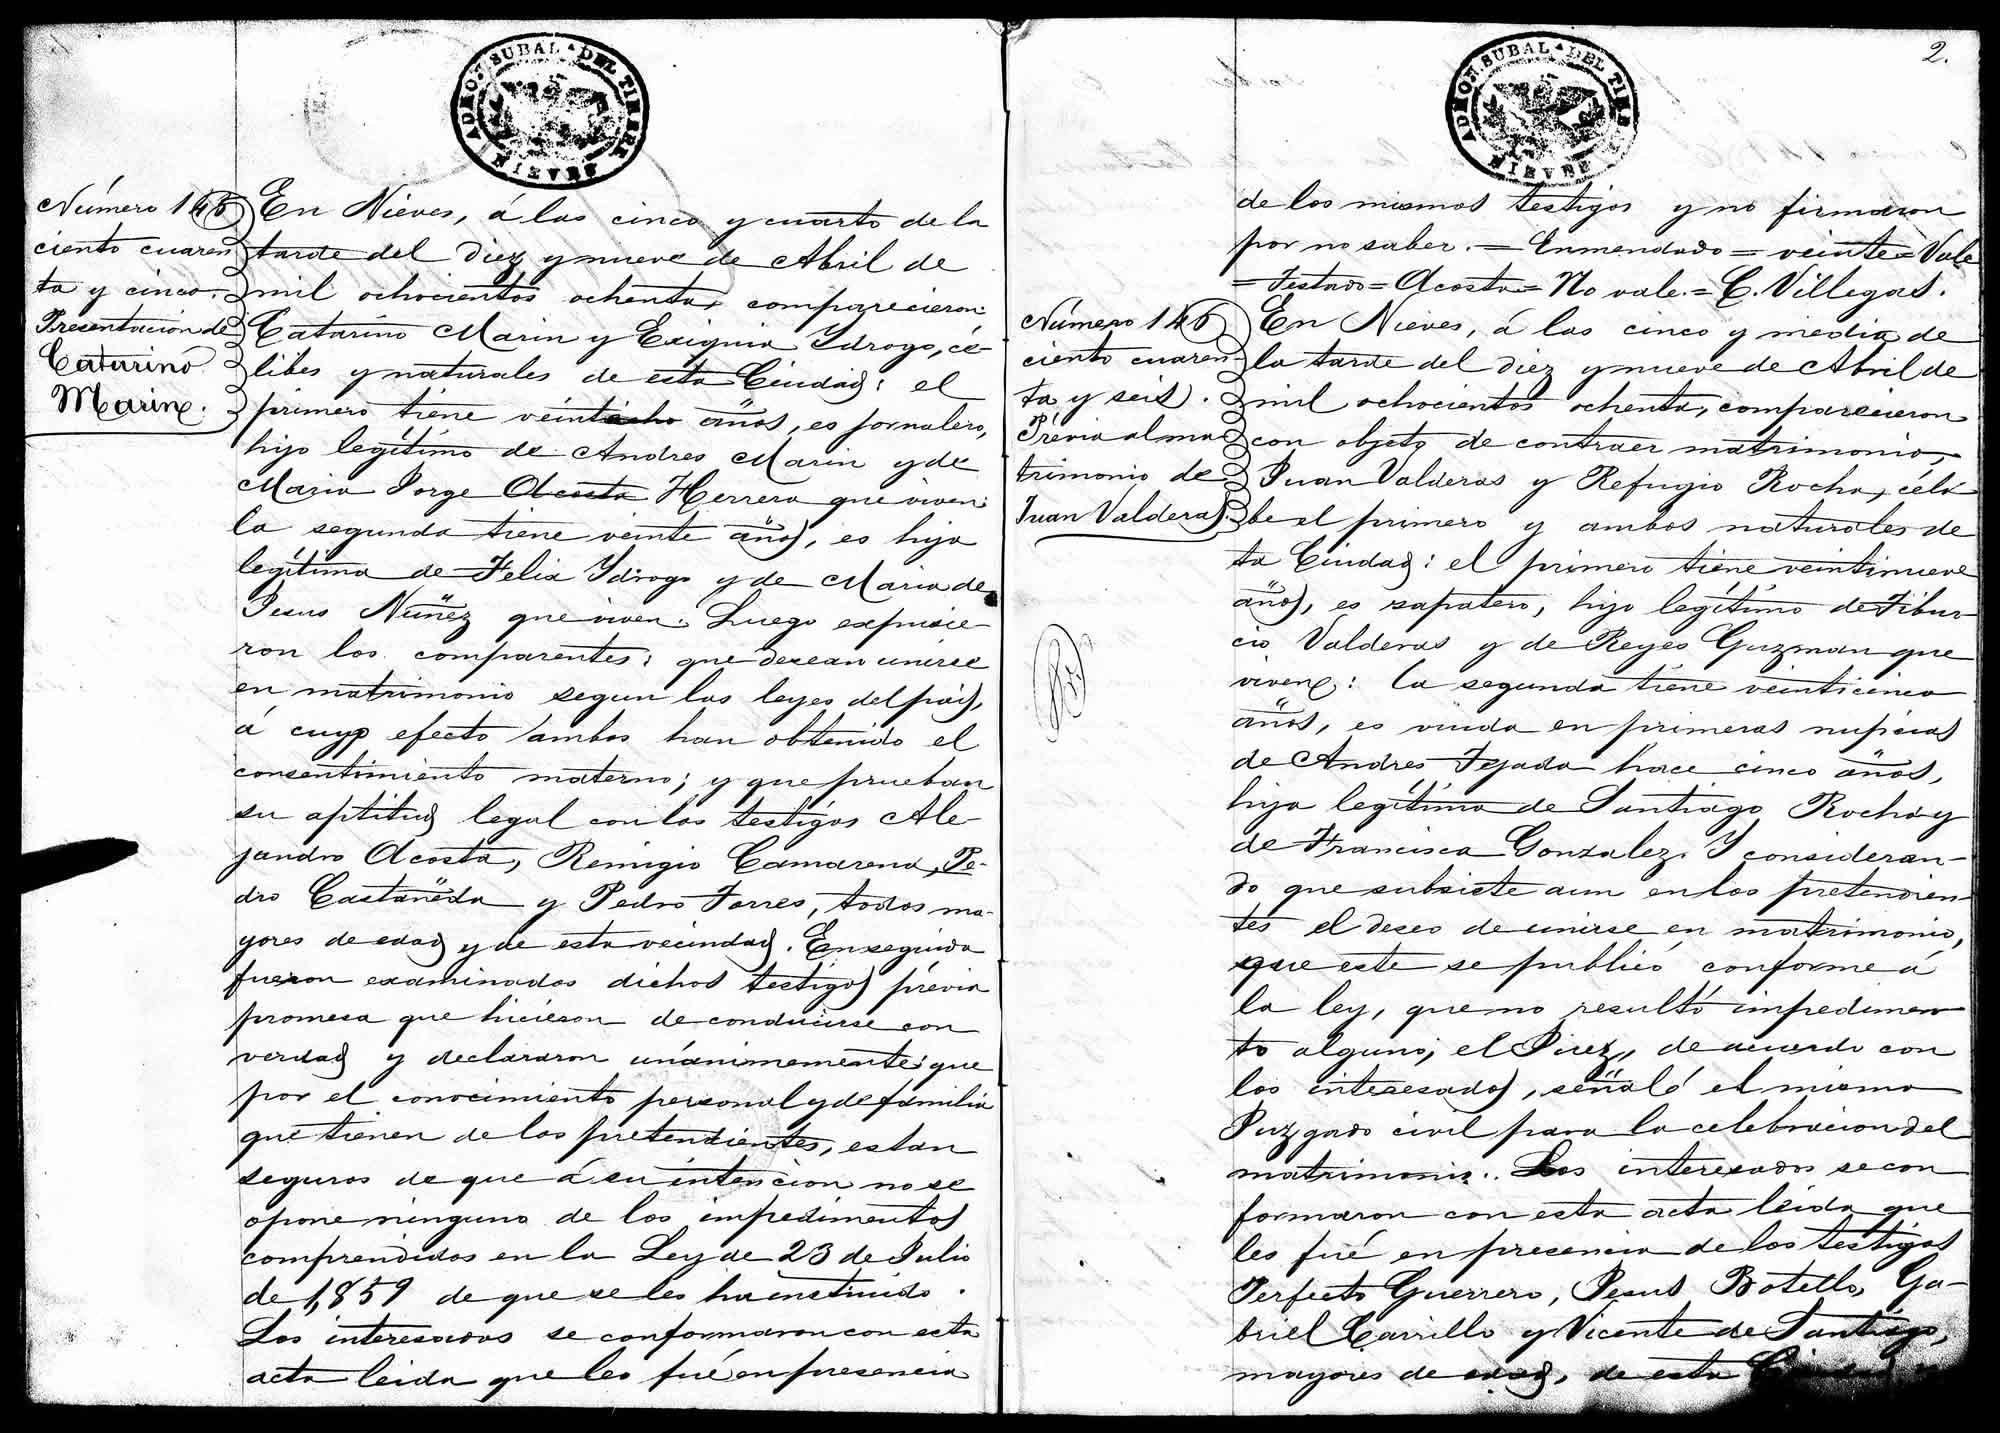 Nieves marriage record for Juan Balderas and Refugio Rocha, #146